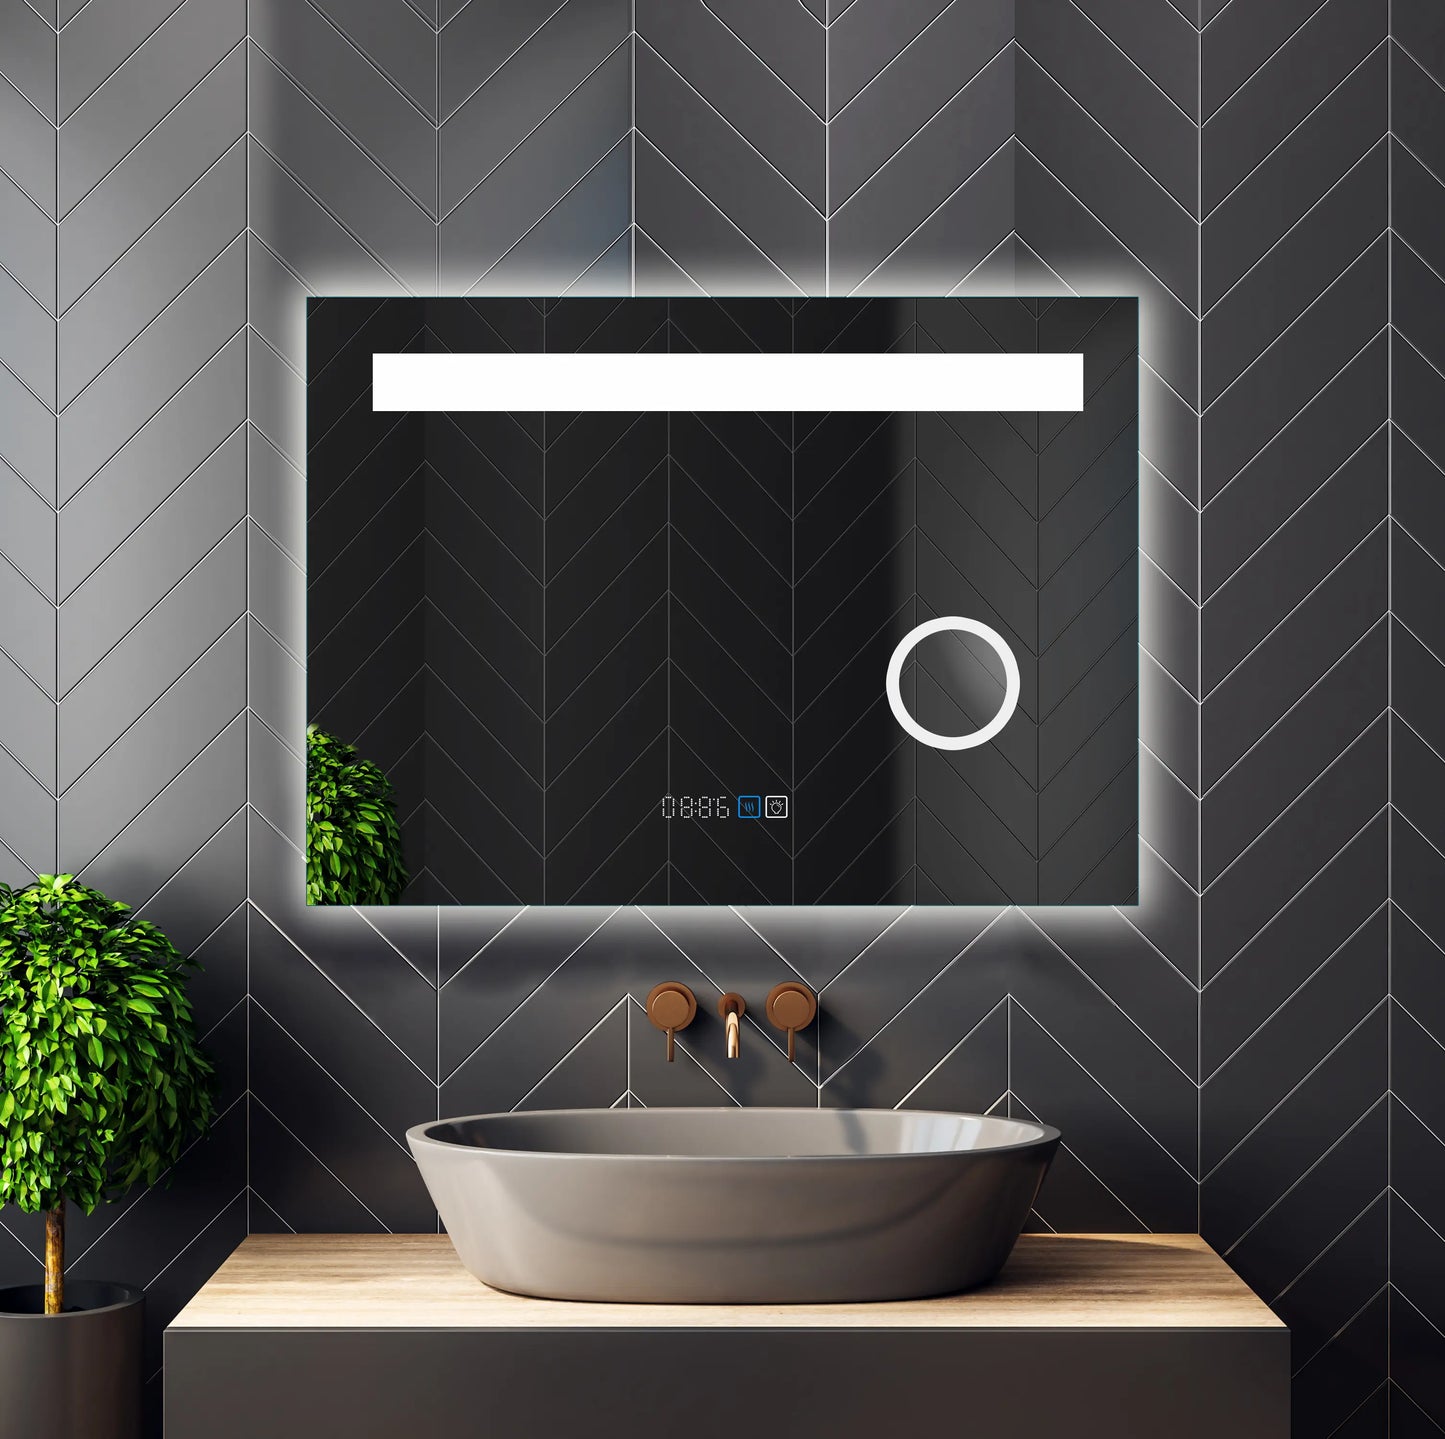 3x Magnifying Smart Bathroom Mirror with Lights, Anti Fog (Defogger)